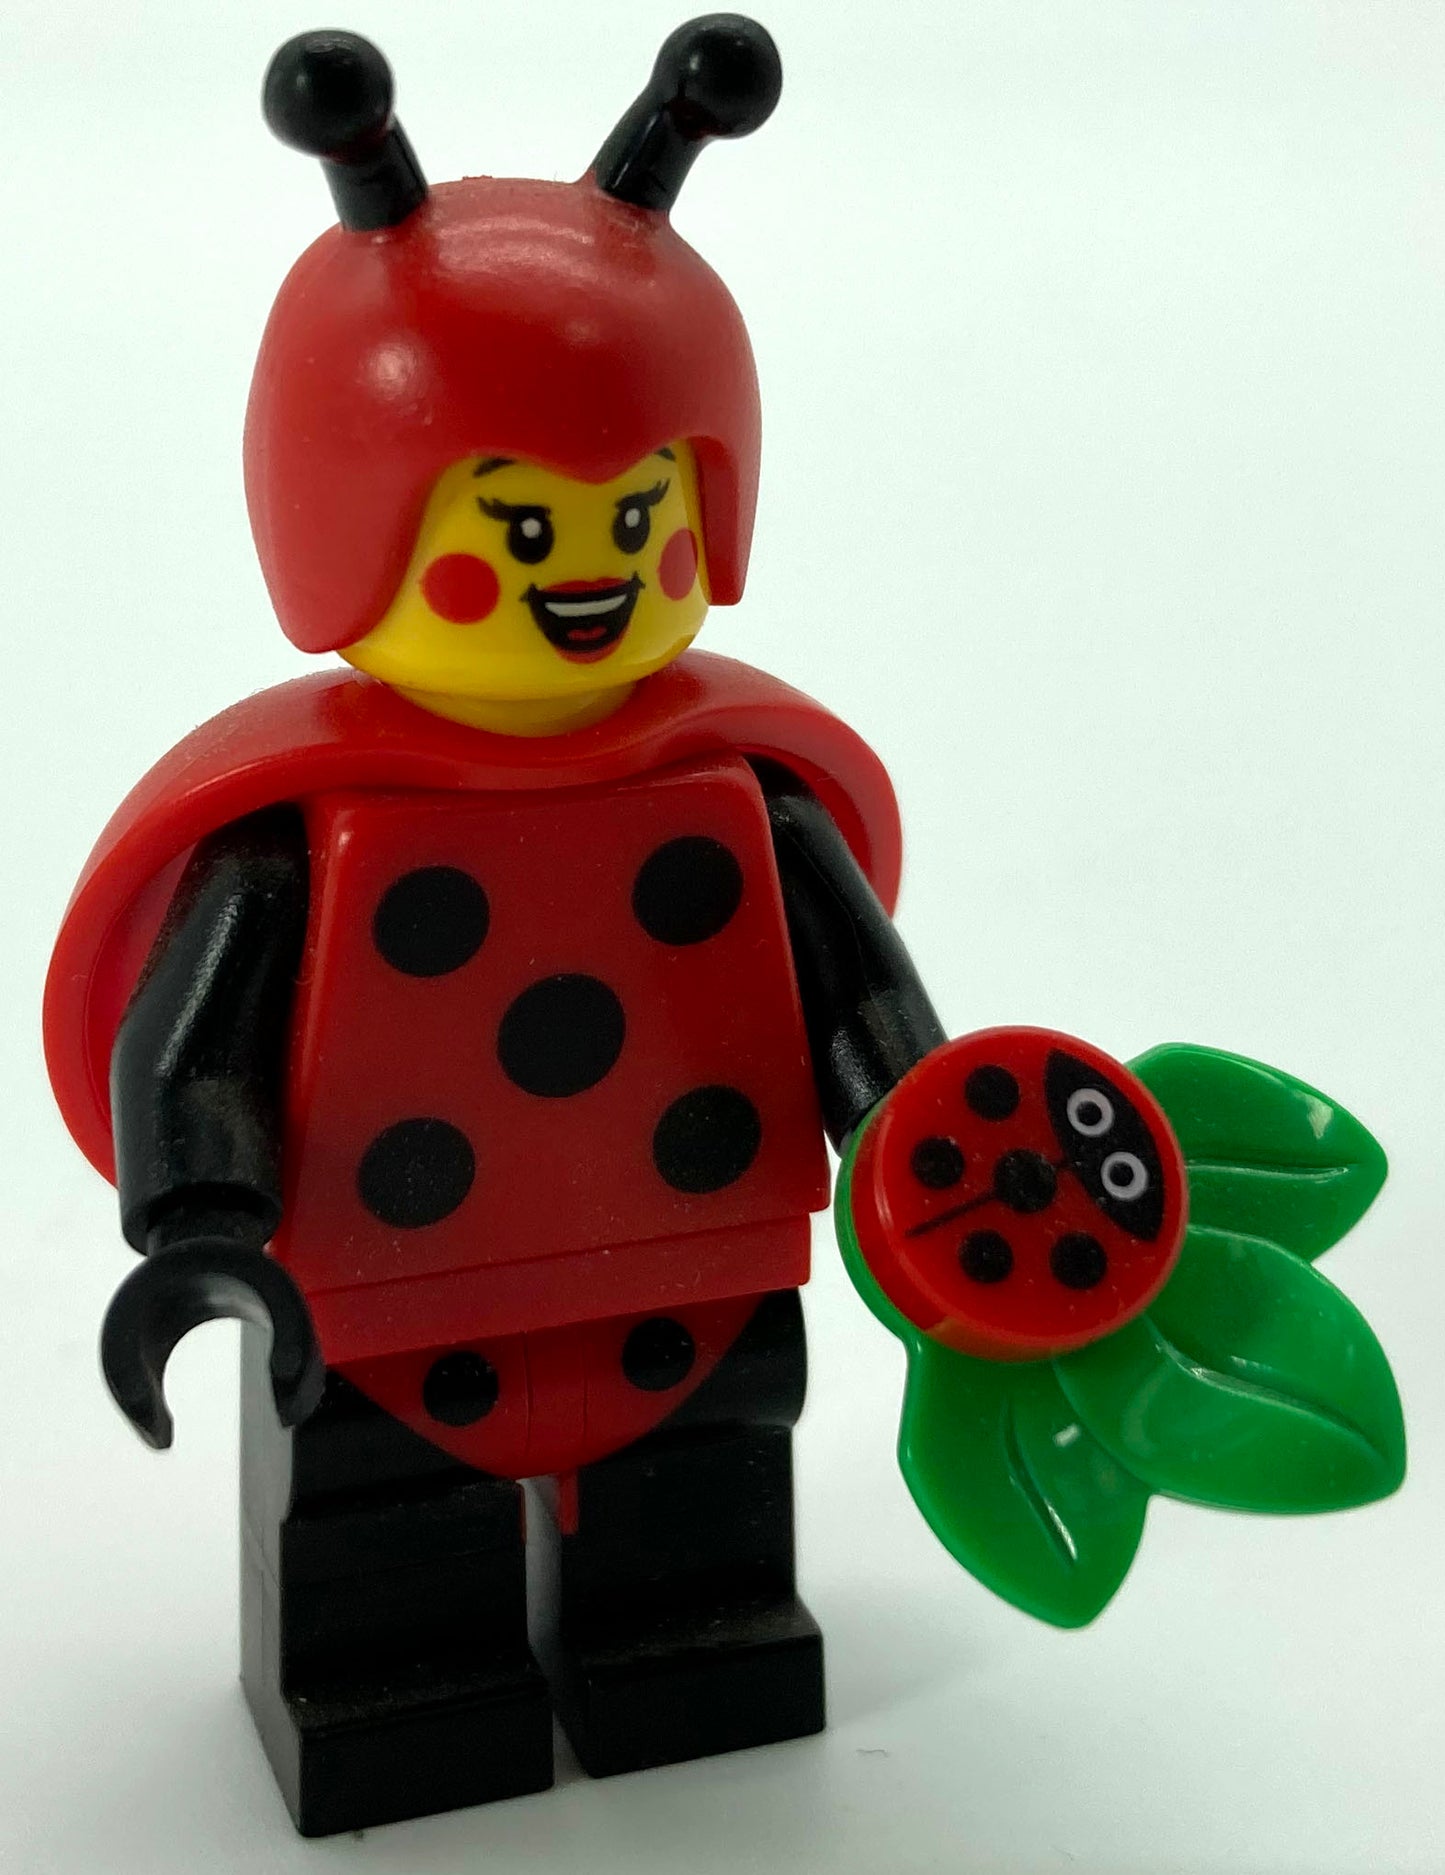 Series 21 - Ladybug Girl